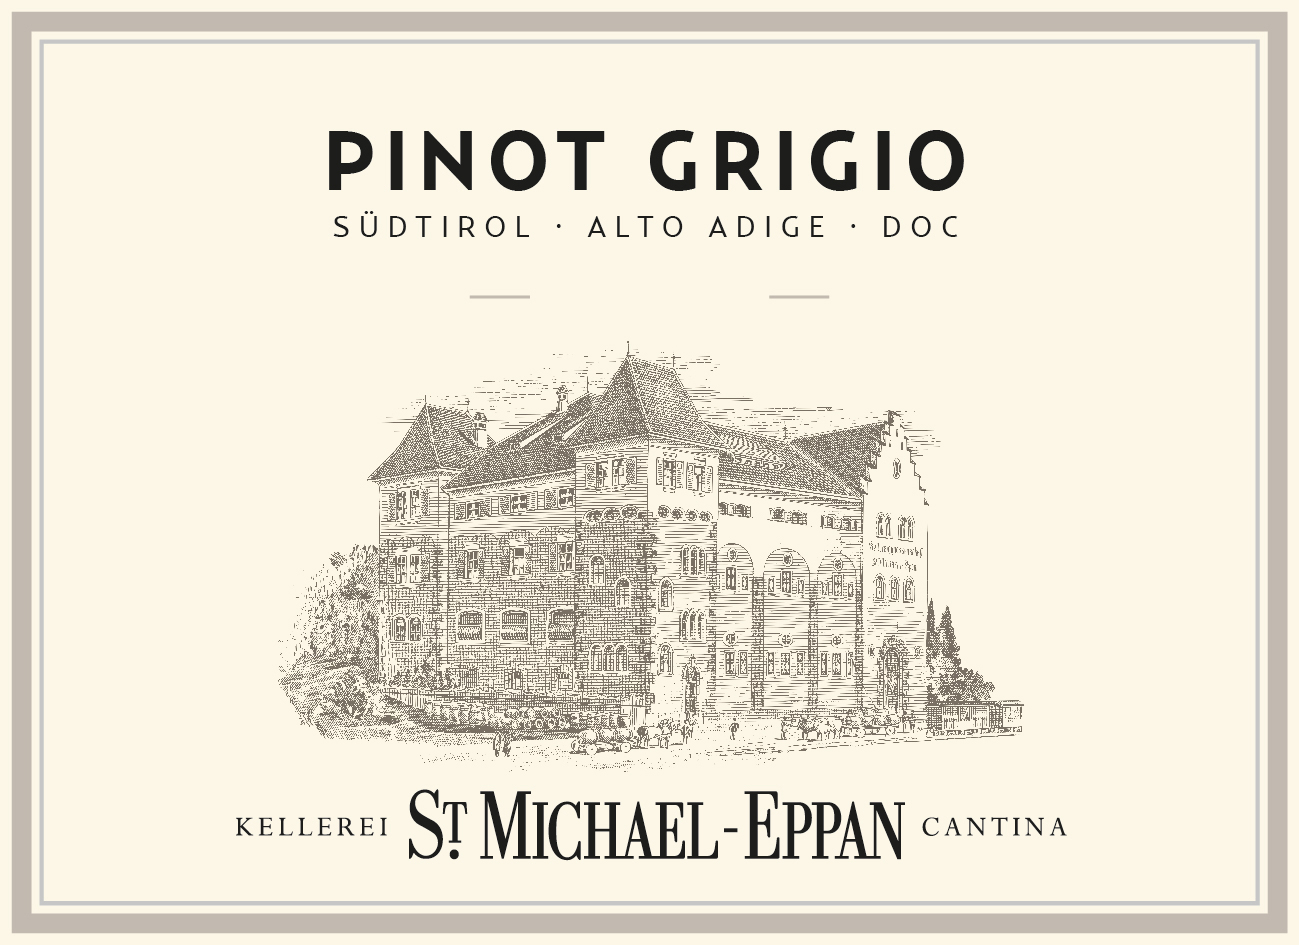 St. Michael-Eppan - Pinot Grigio - Südtirol label